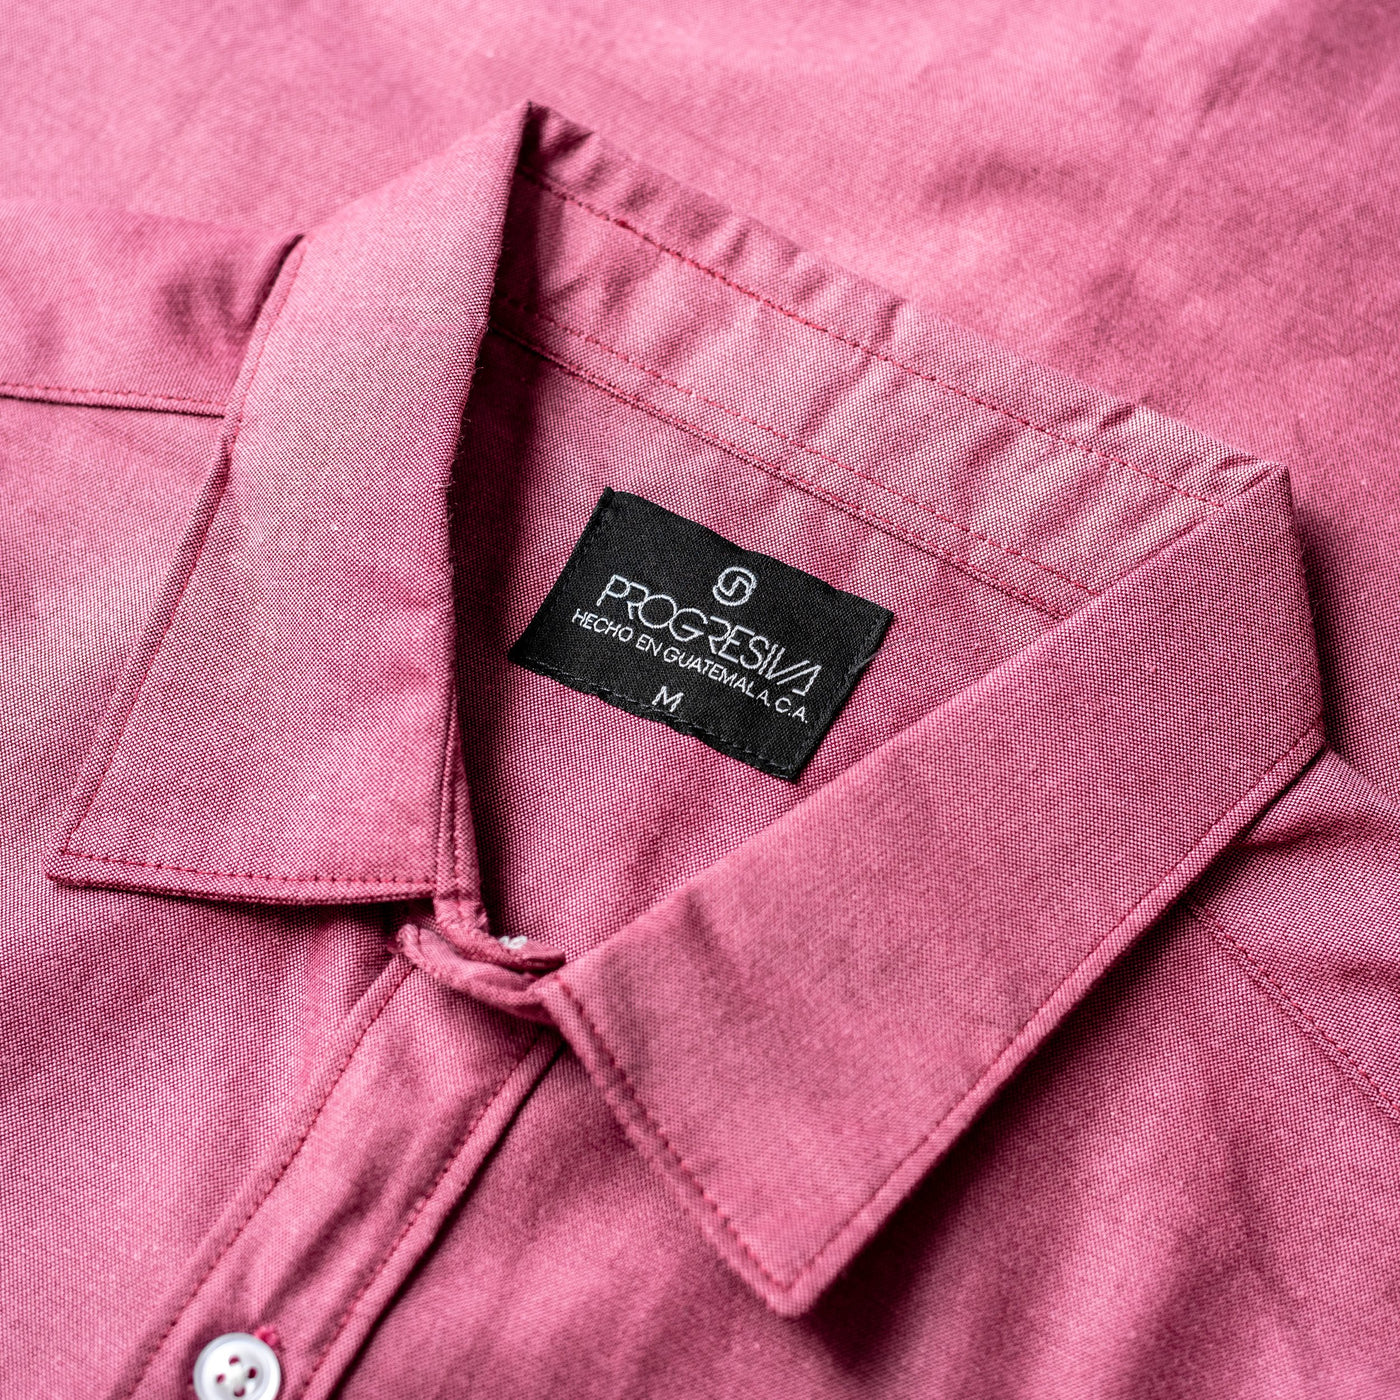 Camisa manga corta cuello normal  - palo rosa oscuro